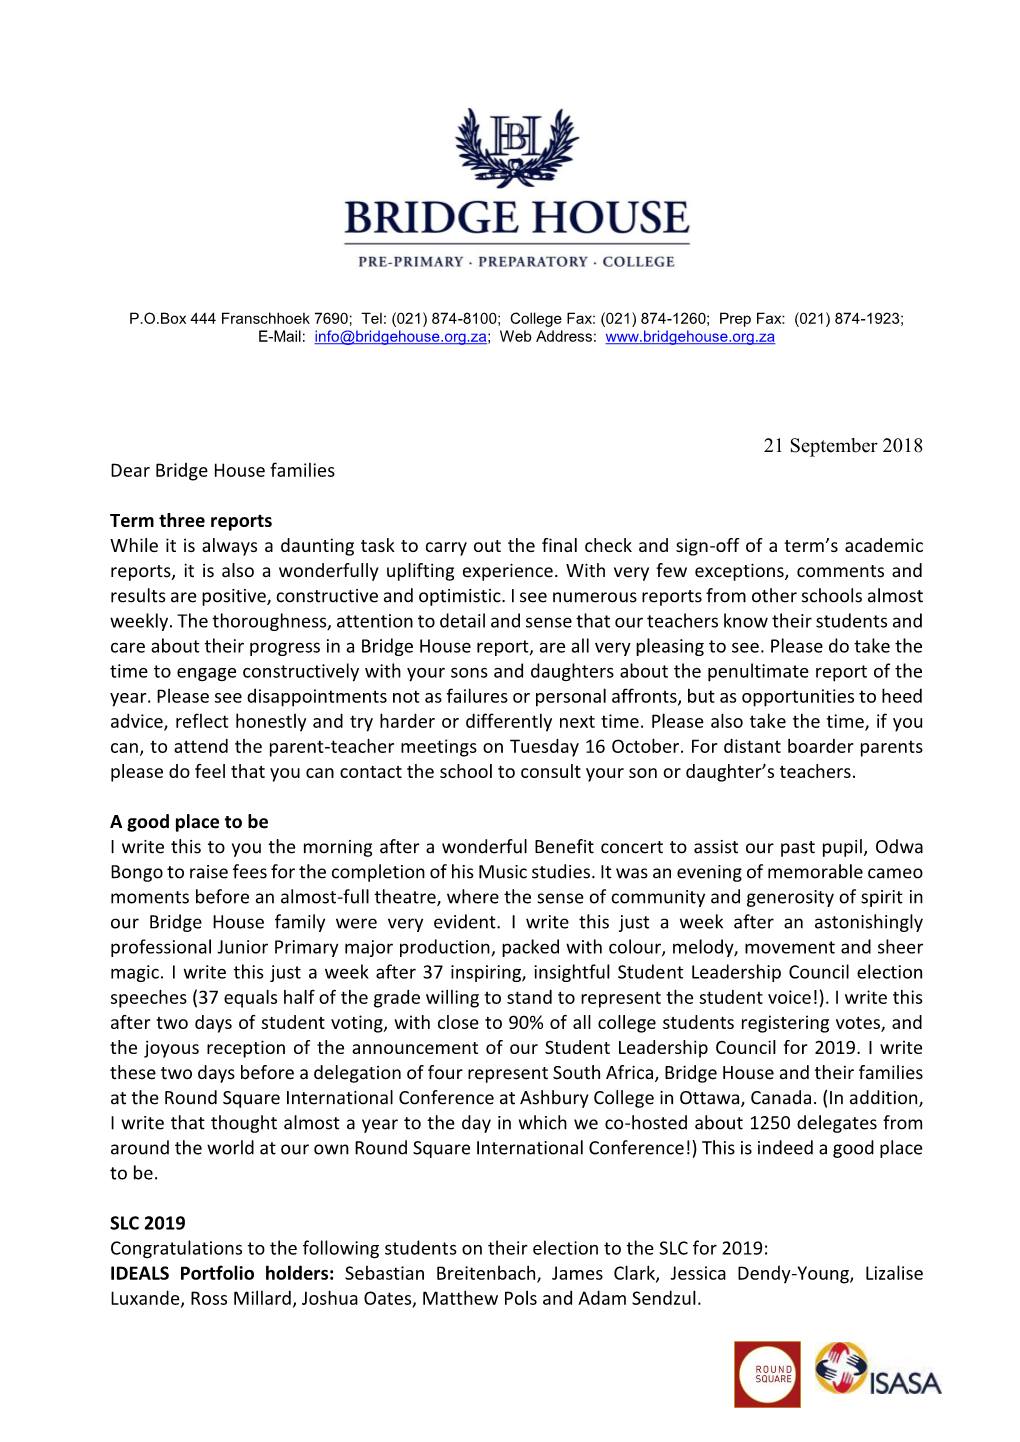 21 September 2018 Dear Bridge House Families